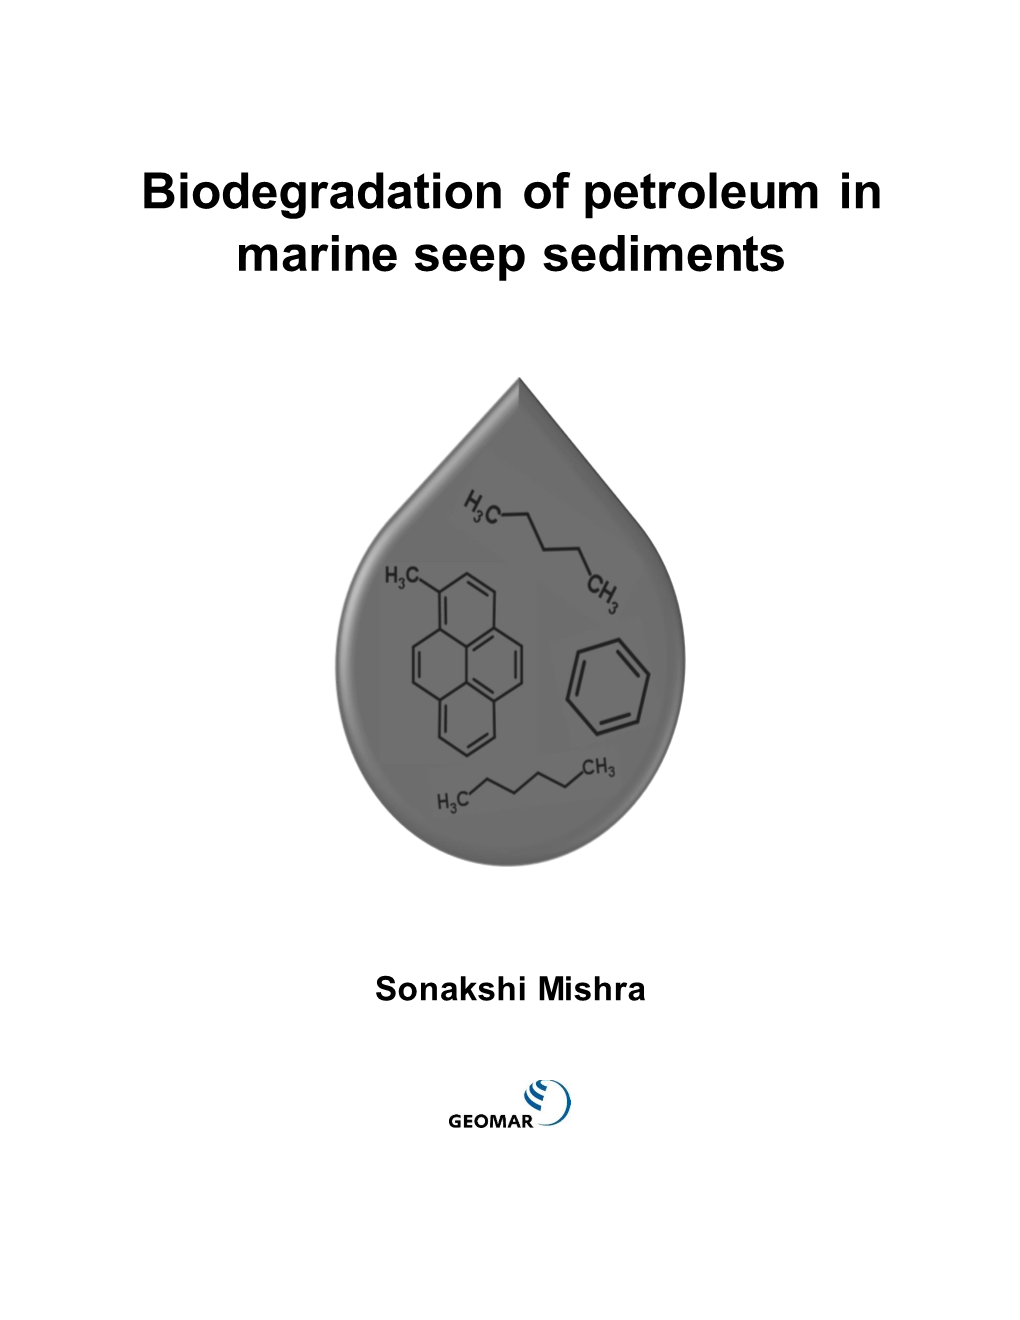 Biodegradation of Petroleum in Marine Seep Sediments